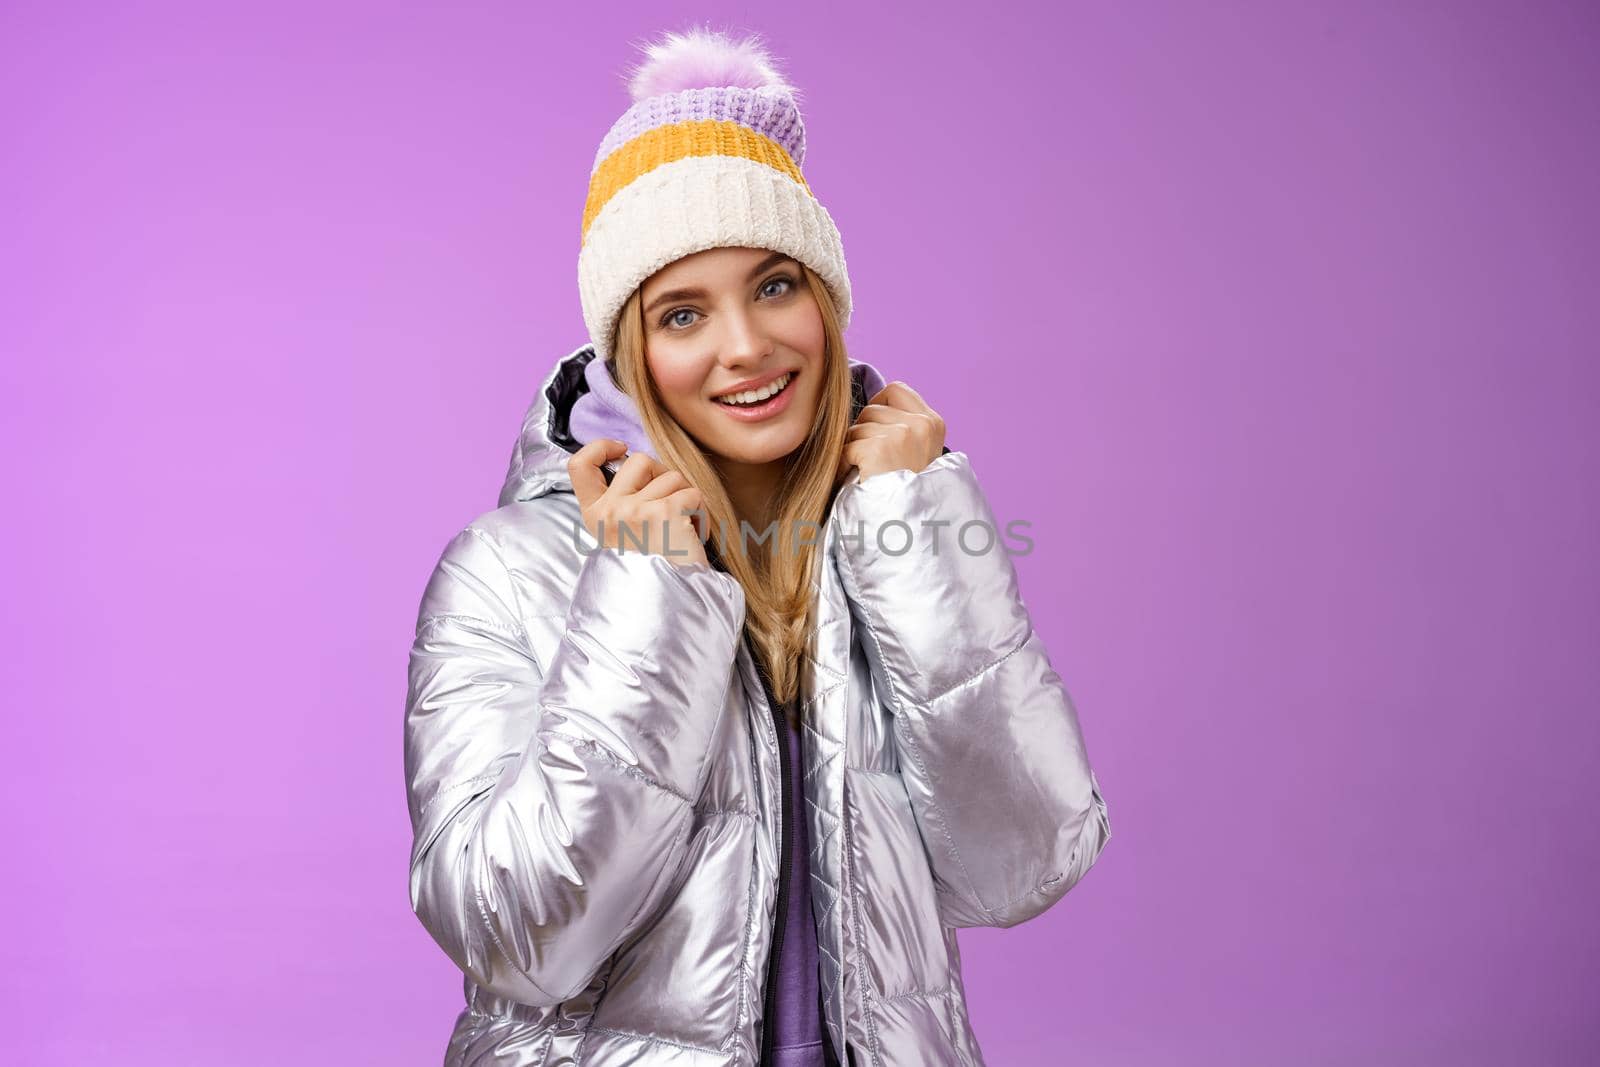 Tender feminine gentle blond girlfriend posing boyfriend take pictures ski resort holiday wearing glittering stylish jacket winter hat standing pleased purple background smiling delighted by Benzoix